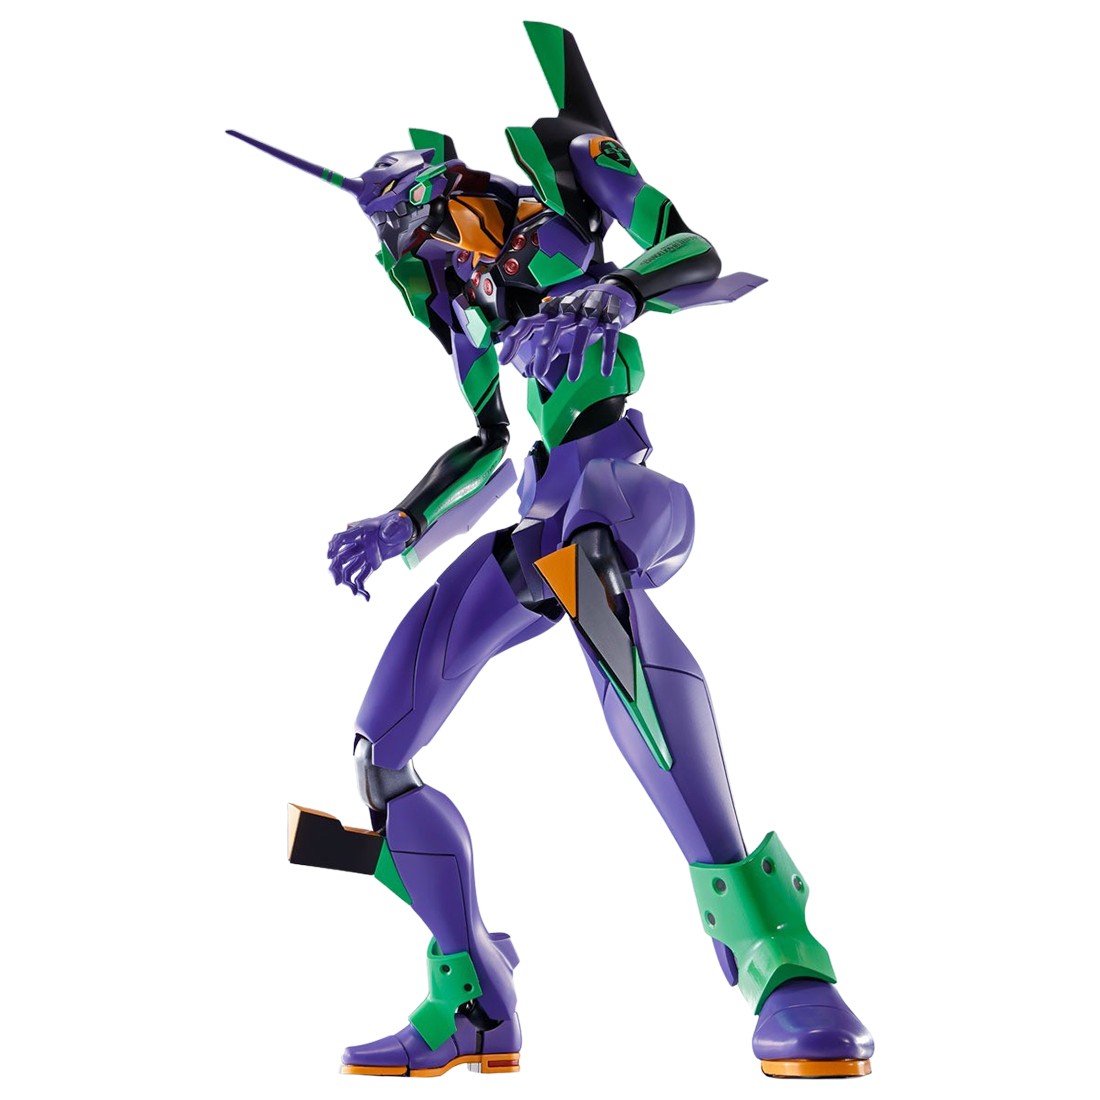 Bandai Dynaction Rebuild of Evangelion Multipurpose Humanoid Decisive Weapon Evangelion Test Type-01 Figure (purple)